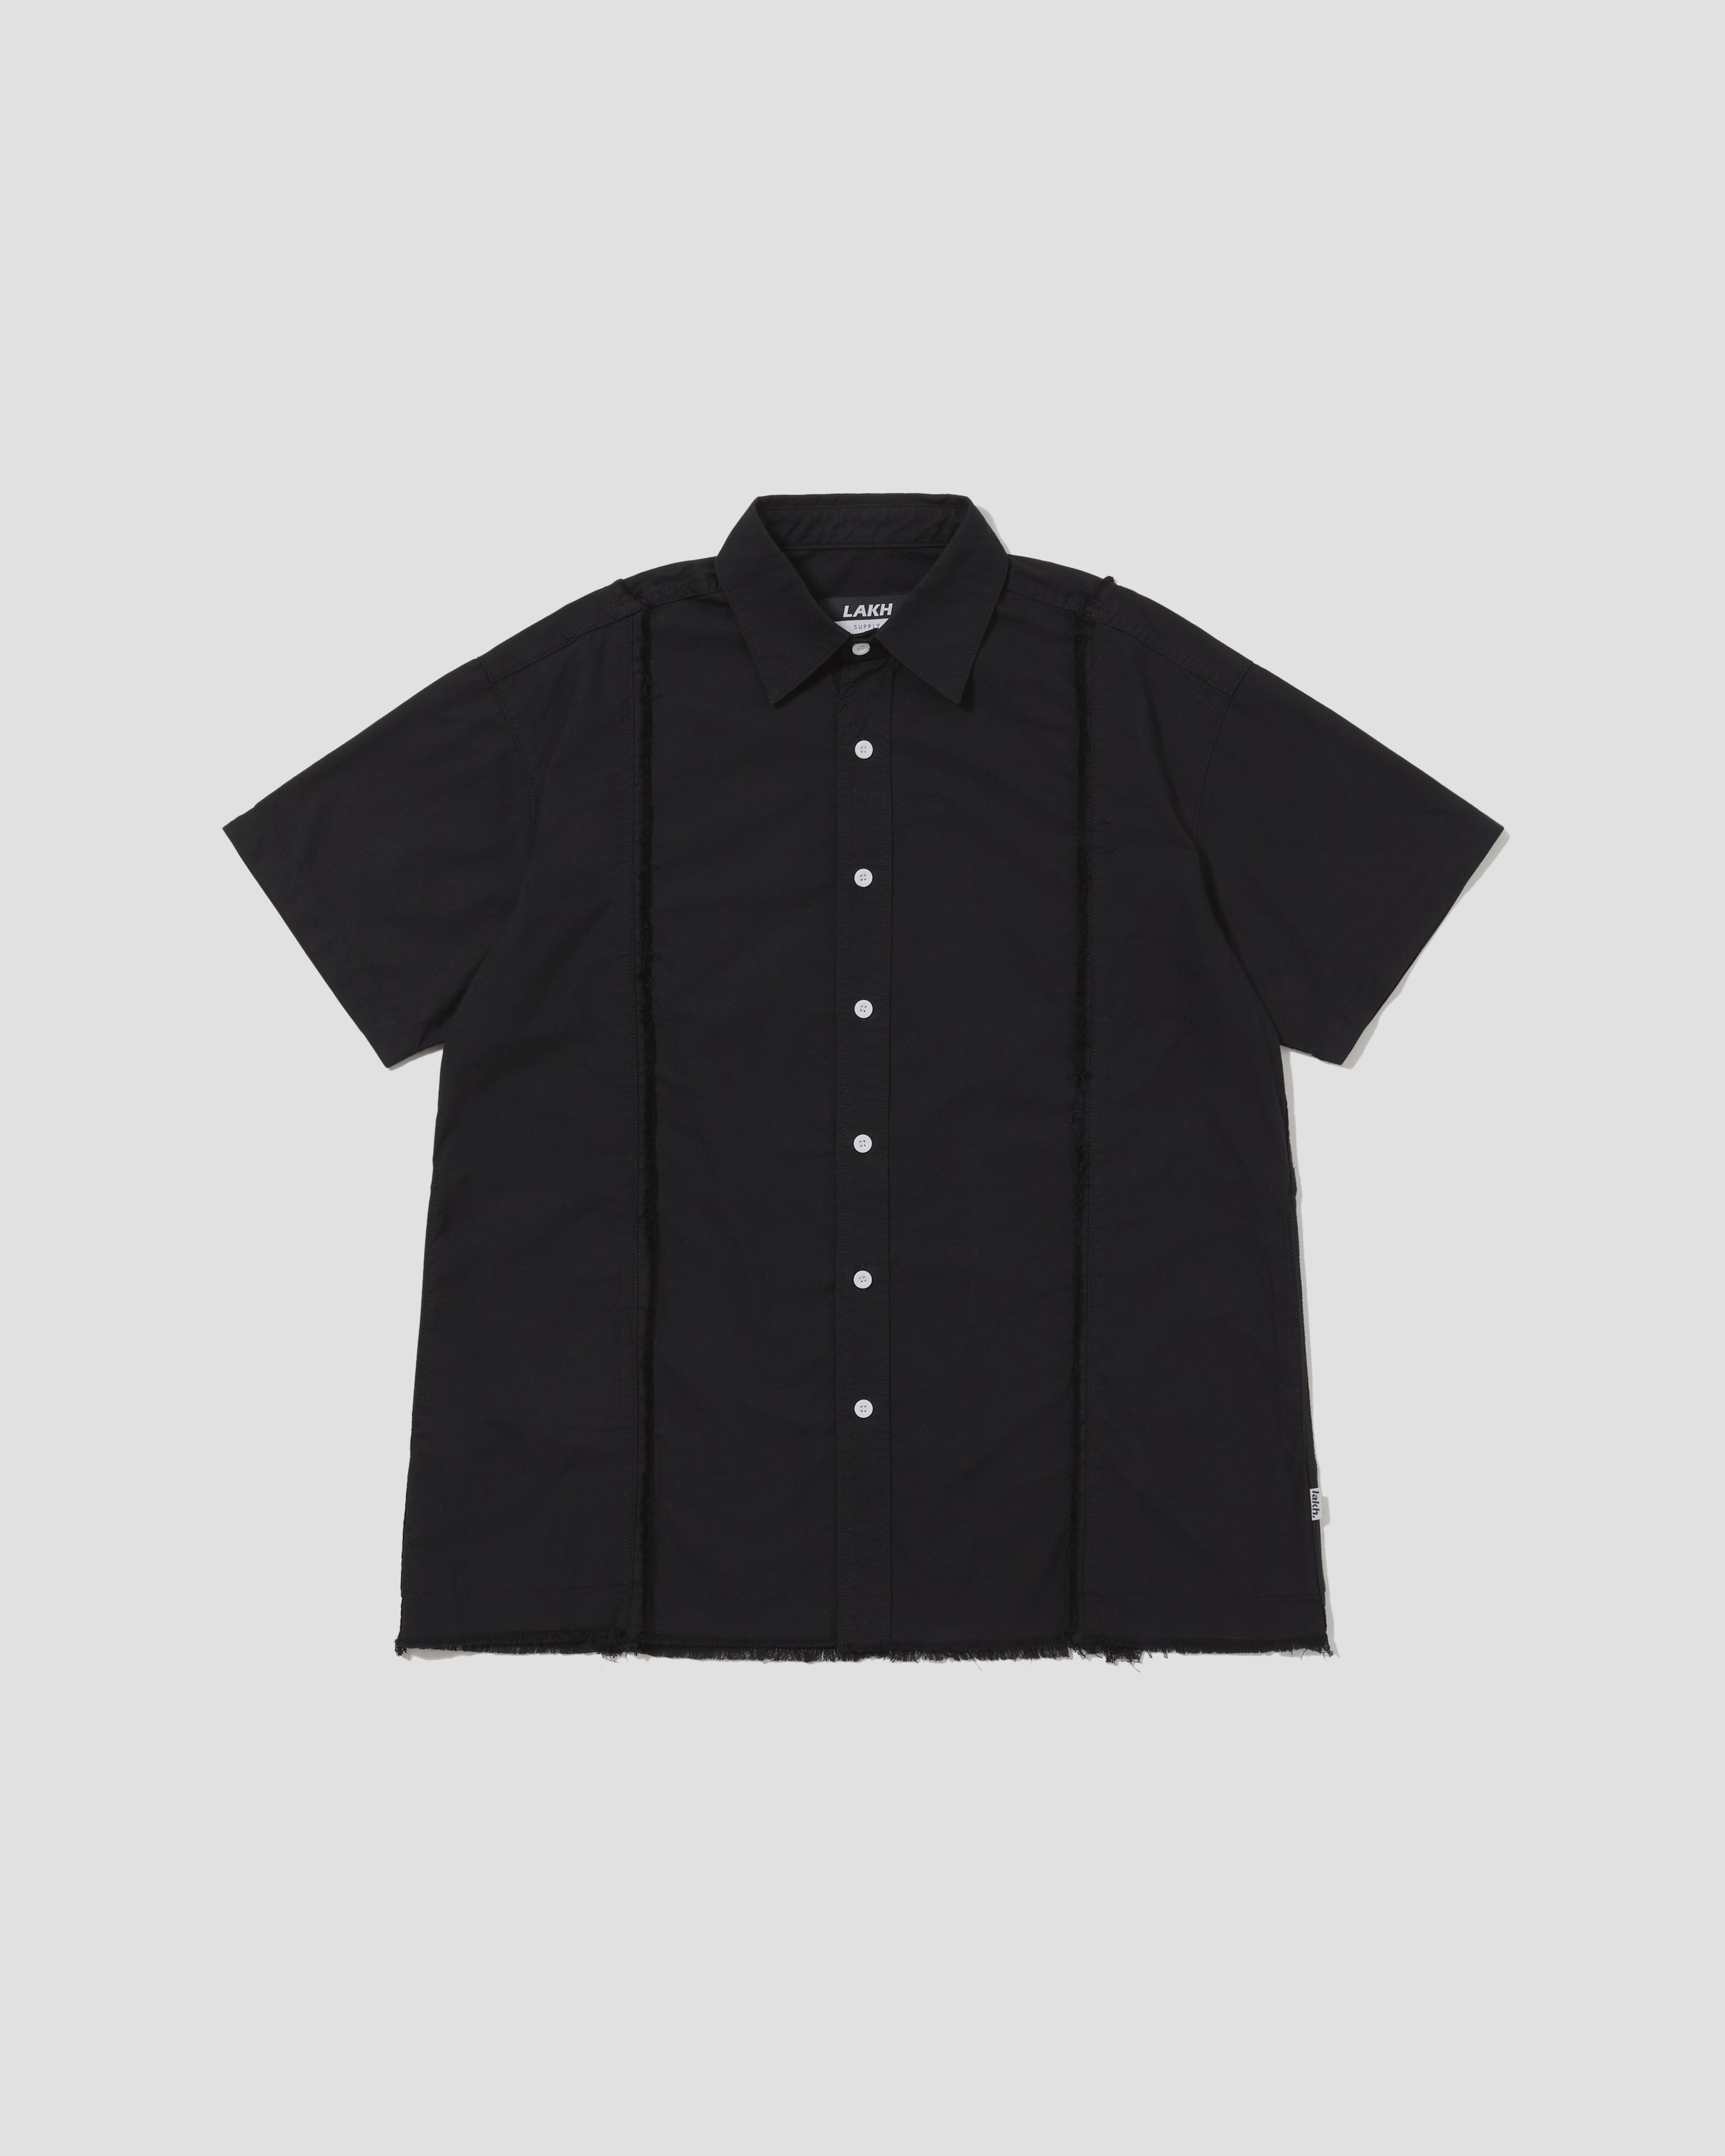 S/S Raw Edge Shirt - Black